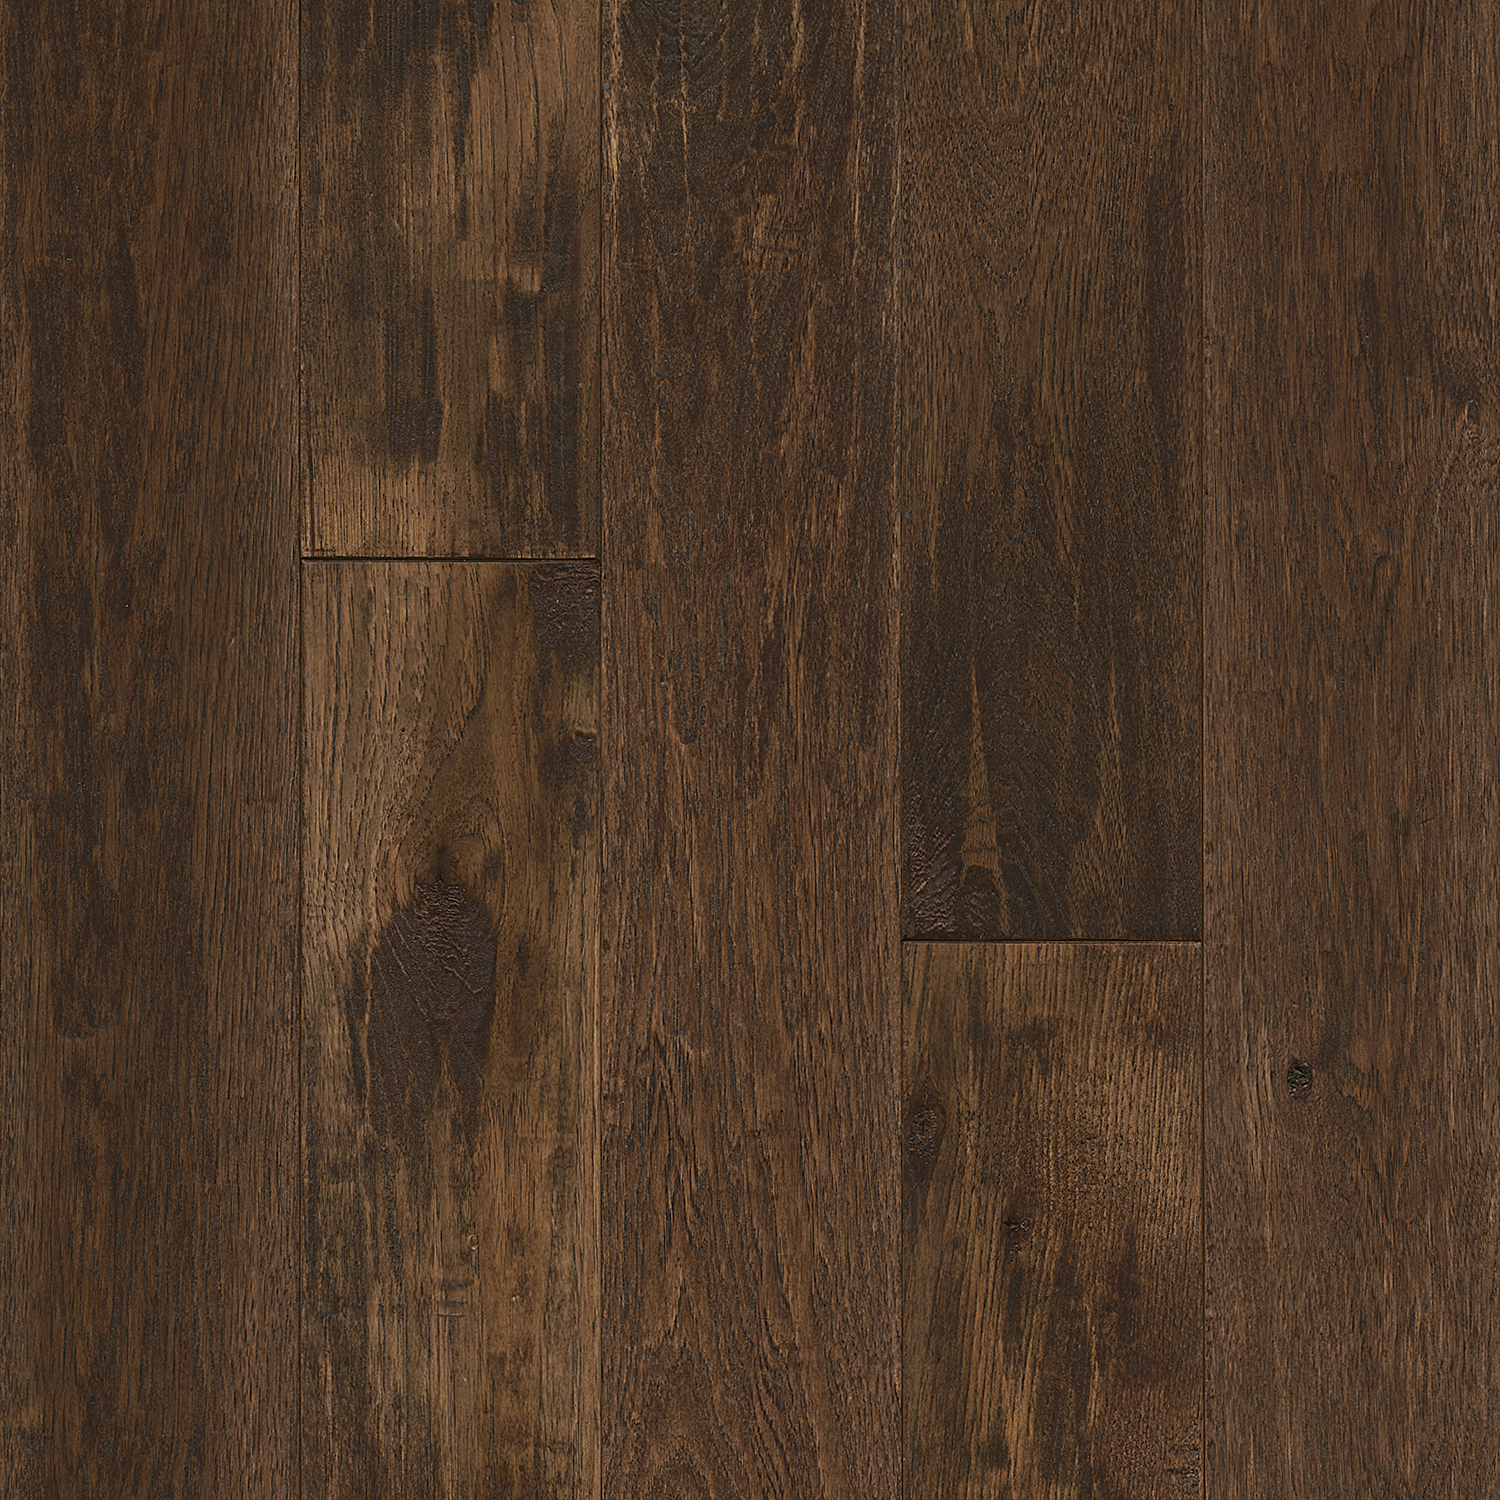 Hickory Solid Hardwood Sas508, R&S Hardwood Flooring